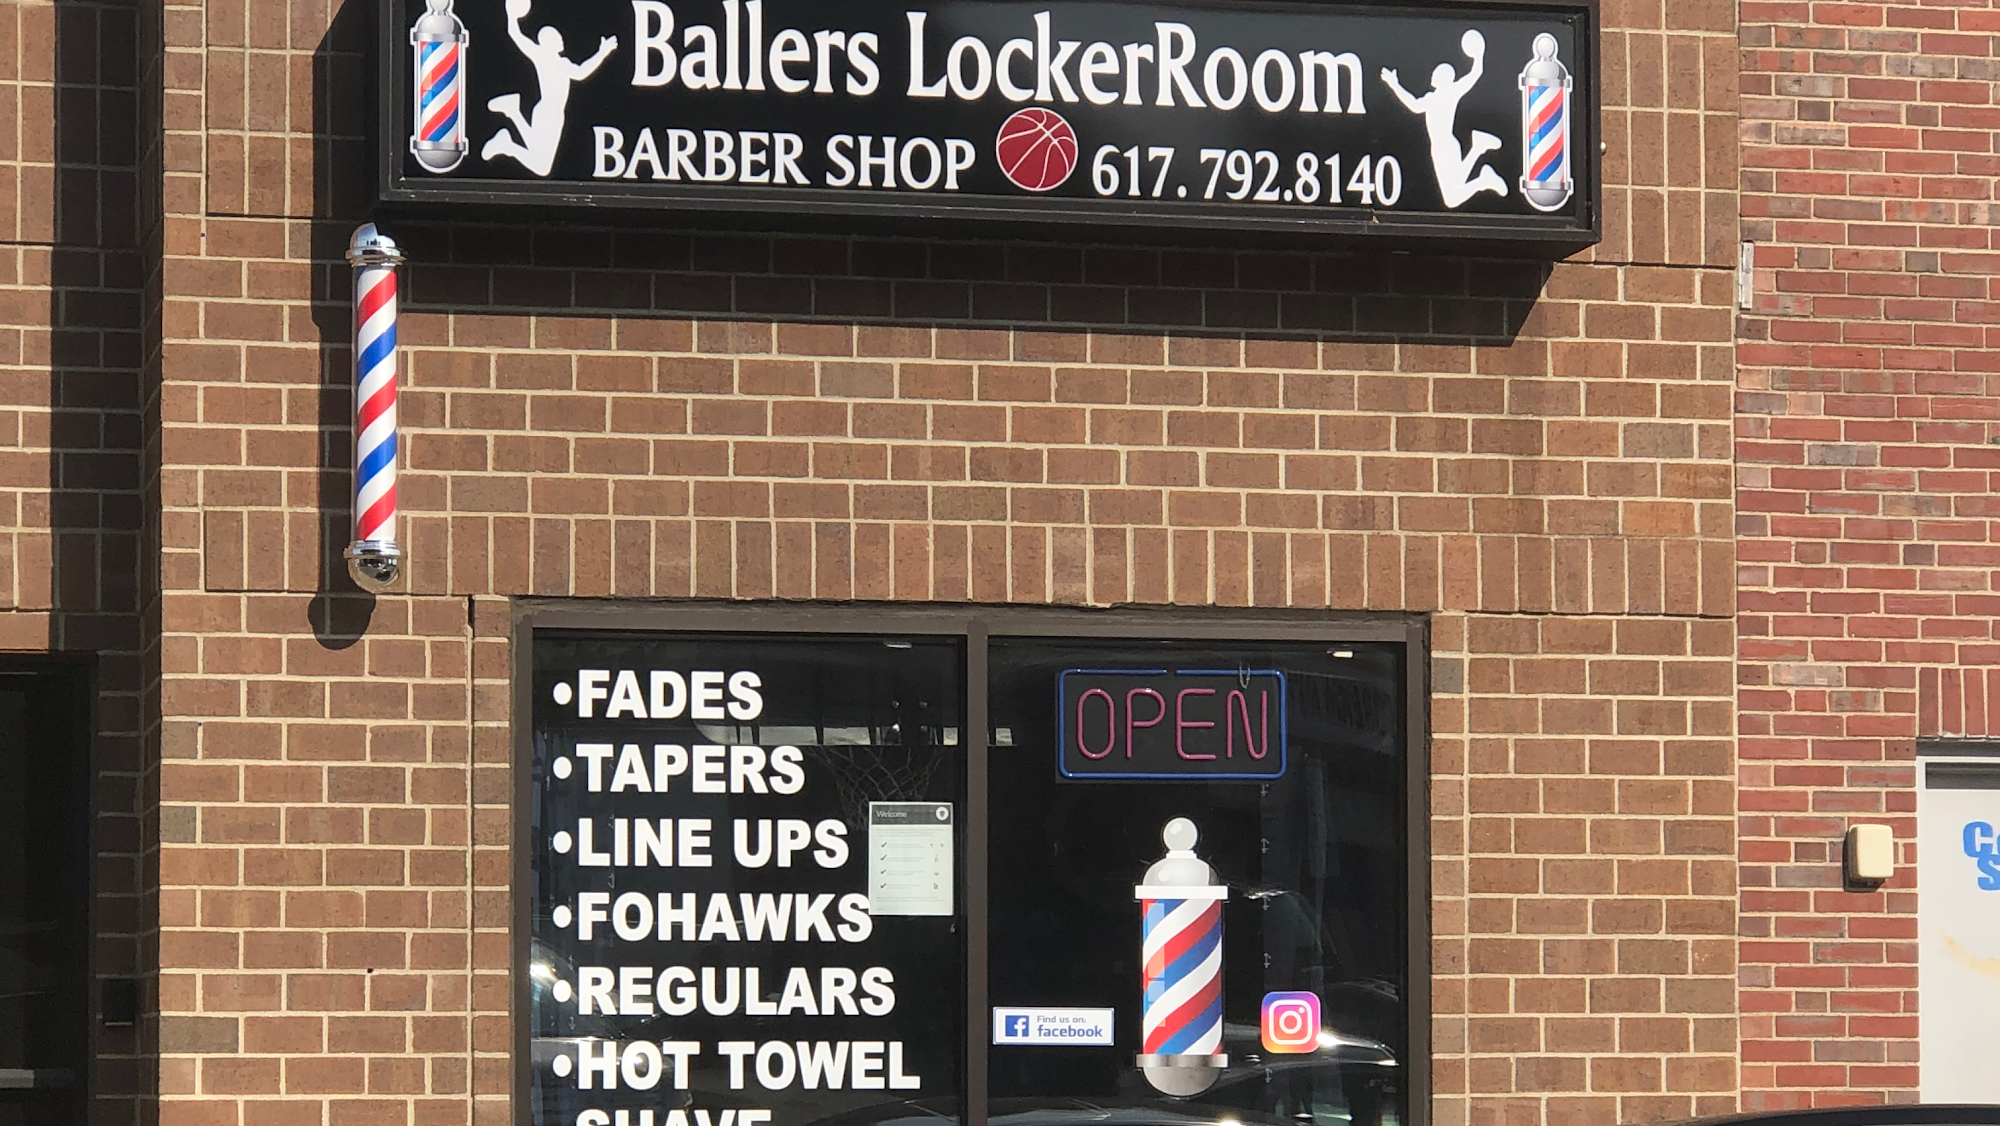 Ballers LockerRoom Barber Shop